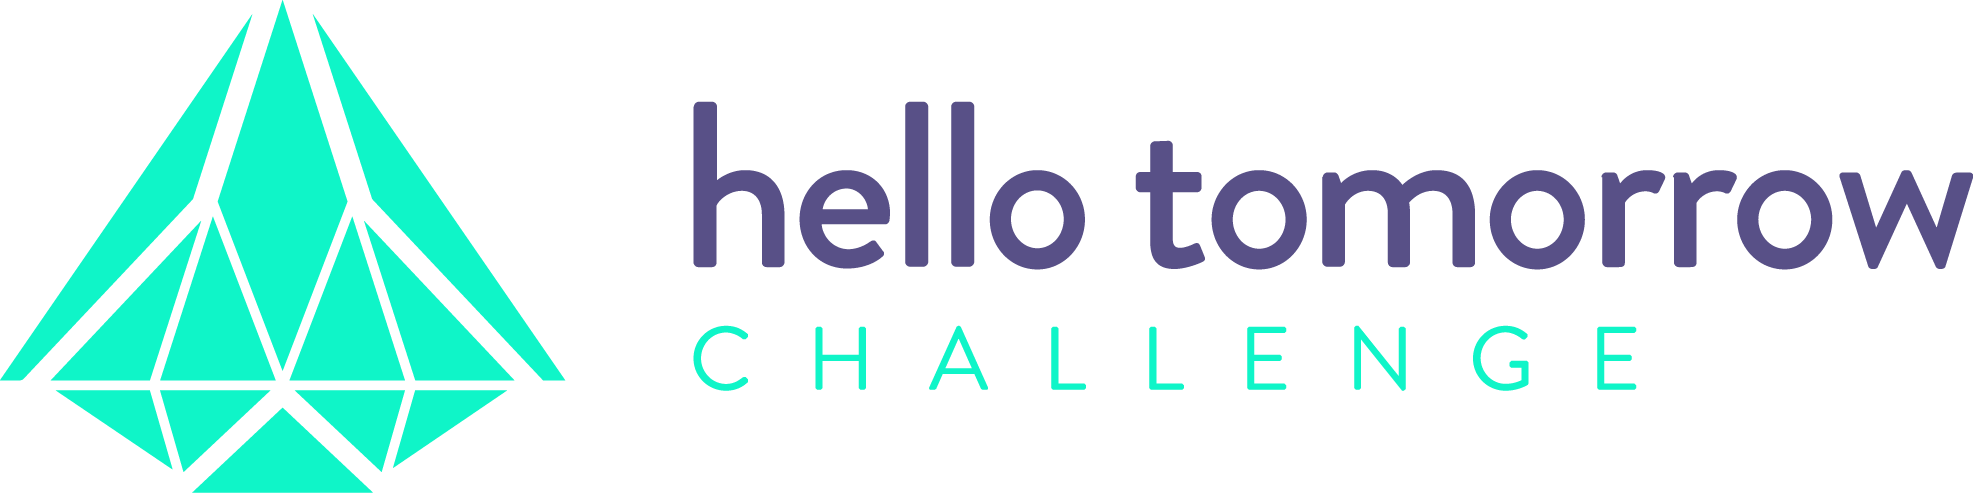 Logo - Hello Tomorrow - Challenge.png